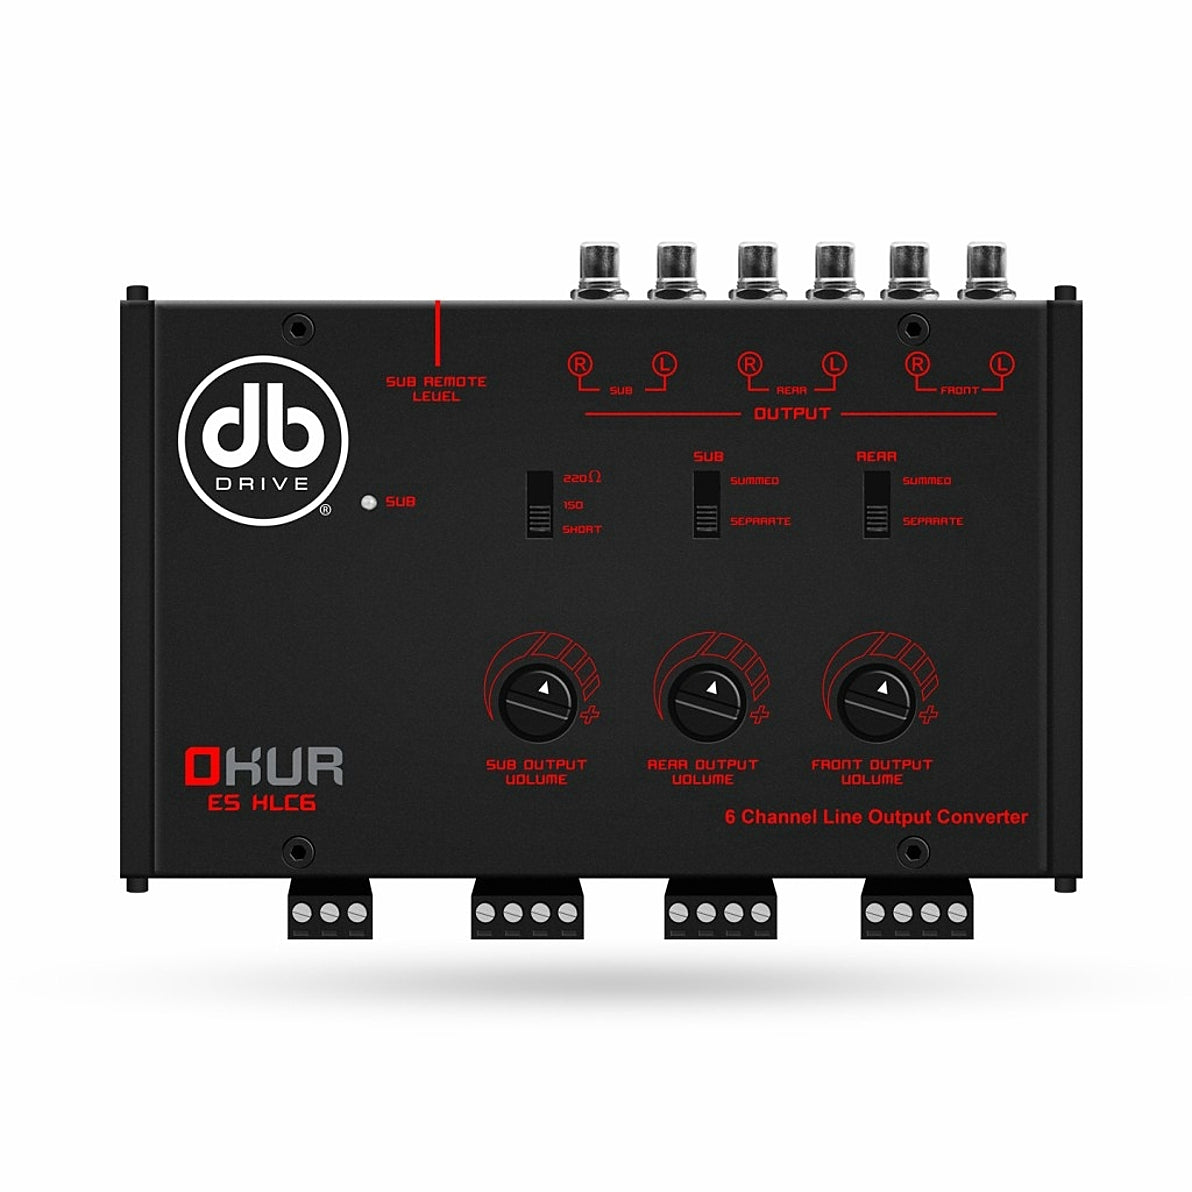 DB Drive E5 HLC6 6 Channel Line Output Converter